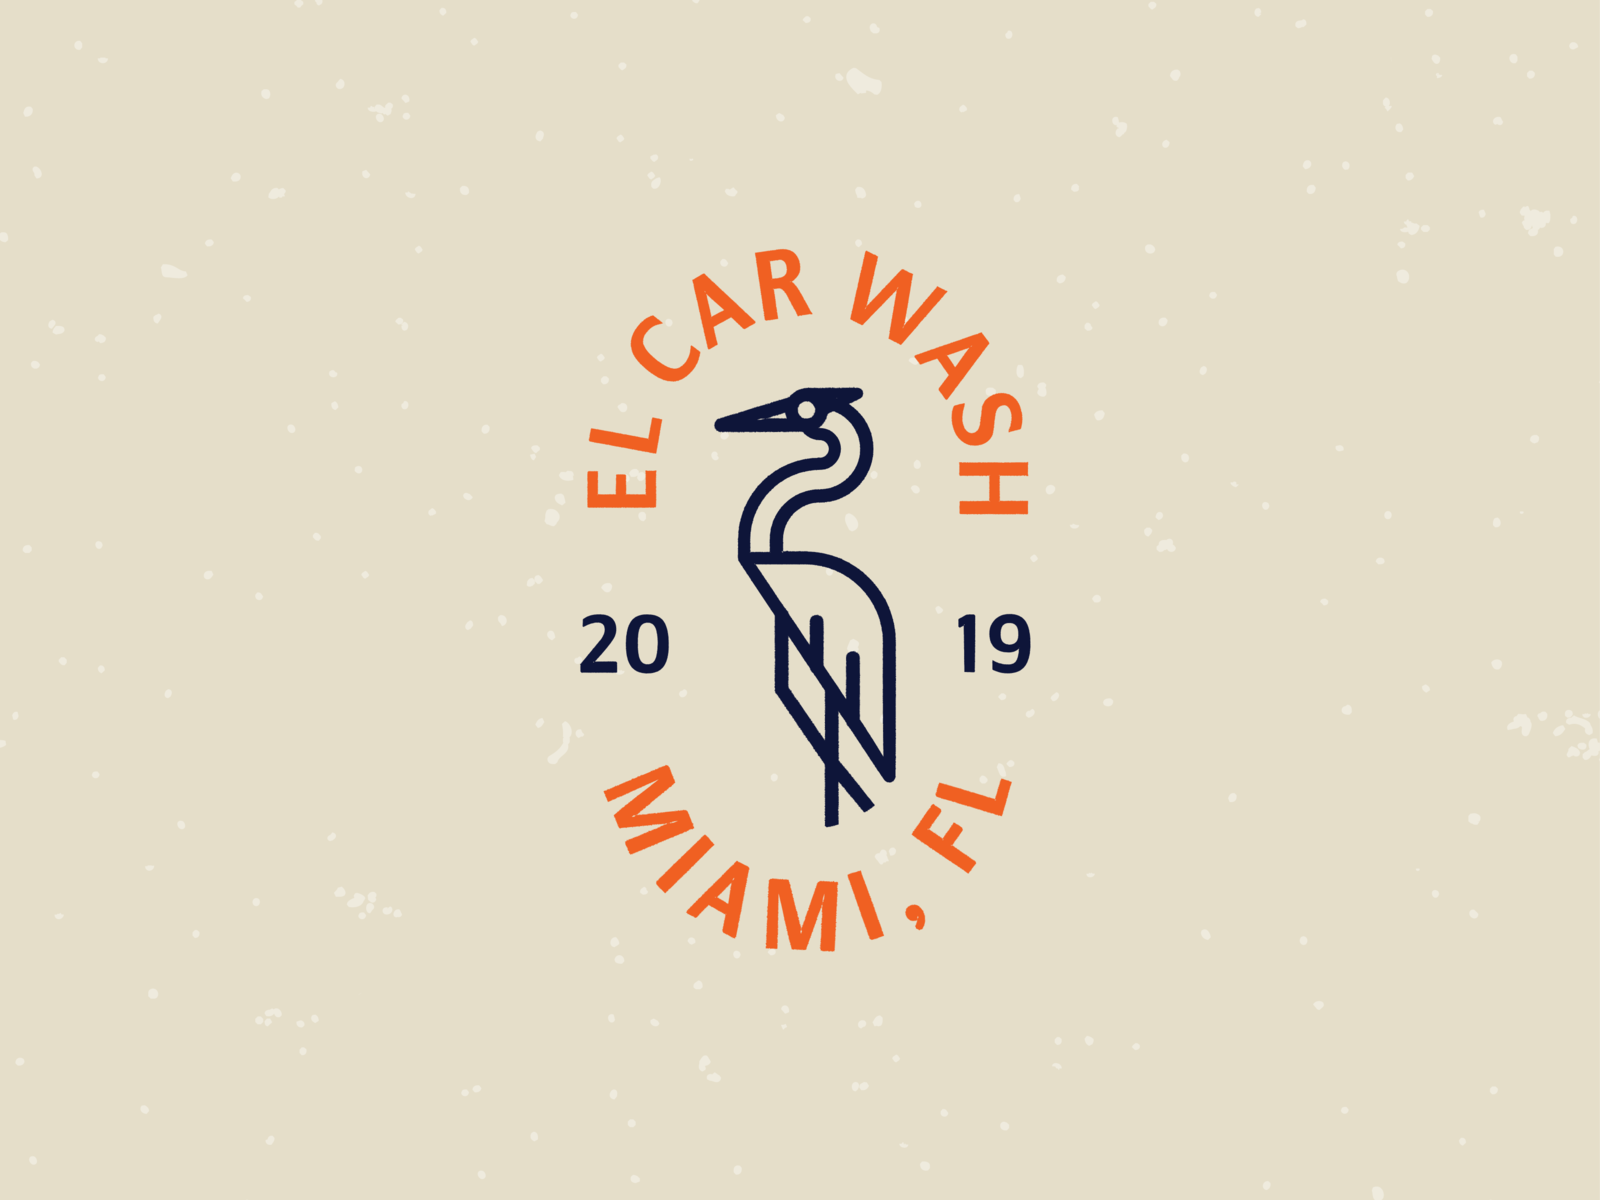 El Carwash Logo by Selina on Dribbble